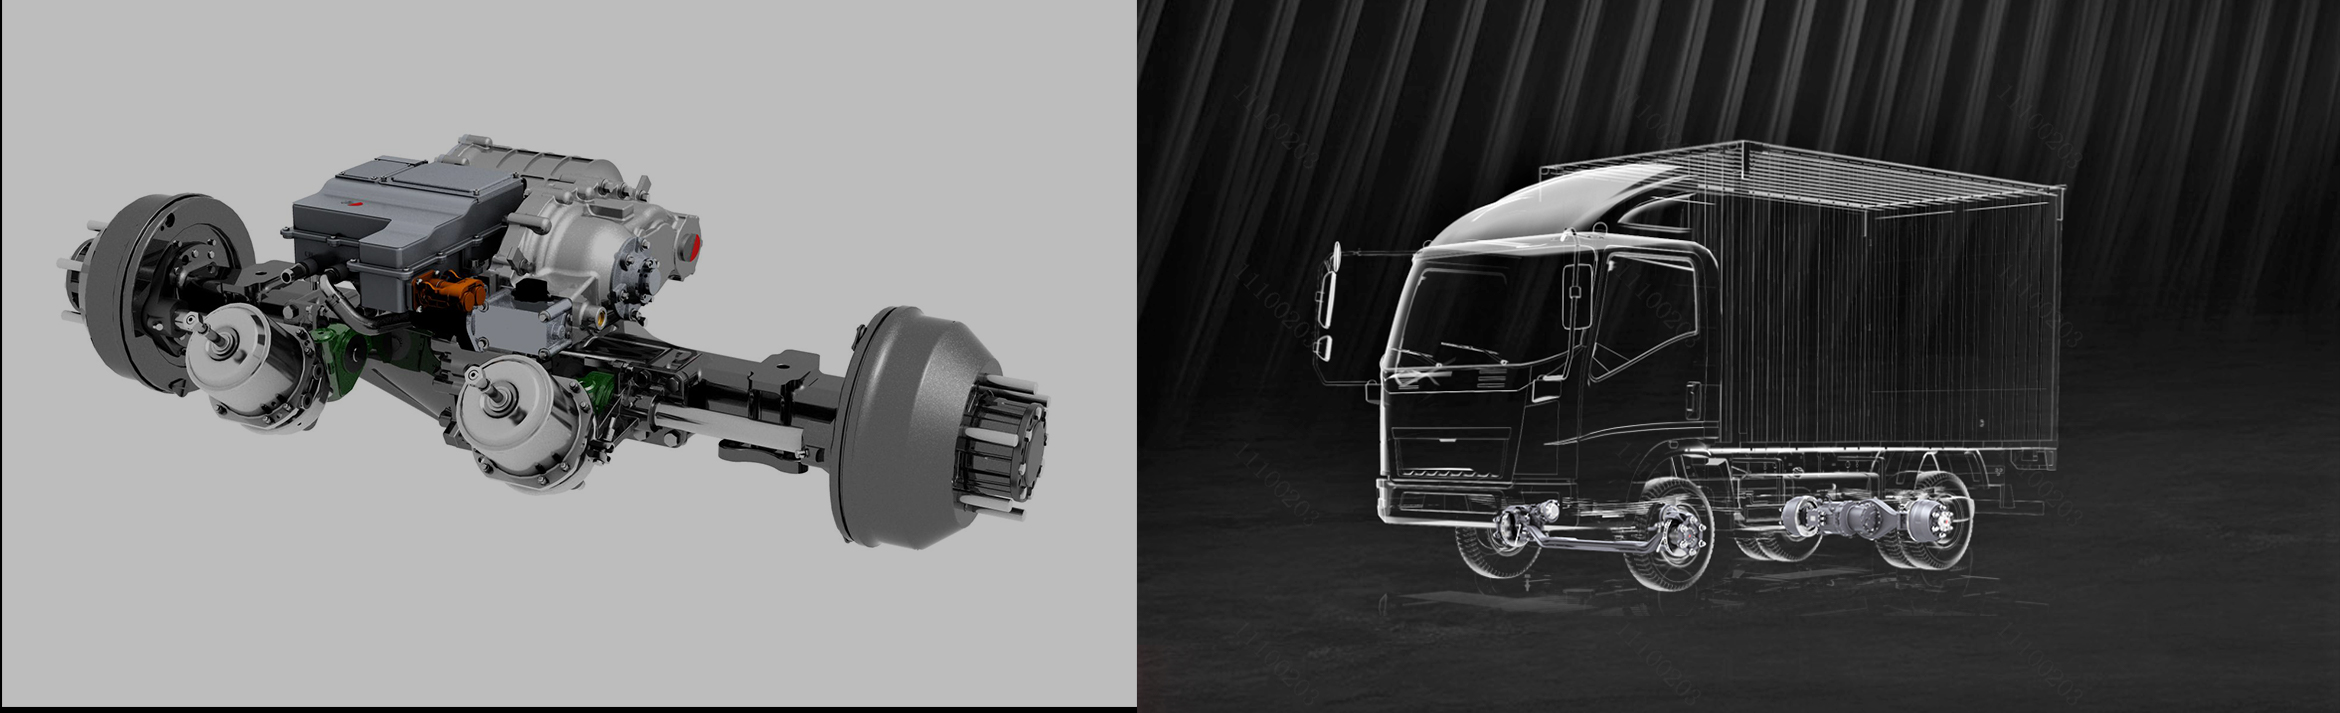 HanDe 3.5T e-axle delivers better ride comfort 